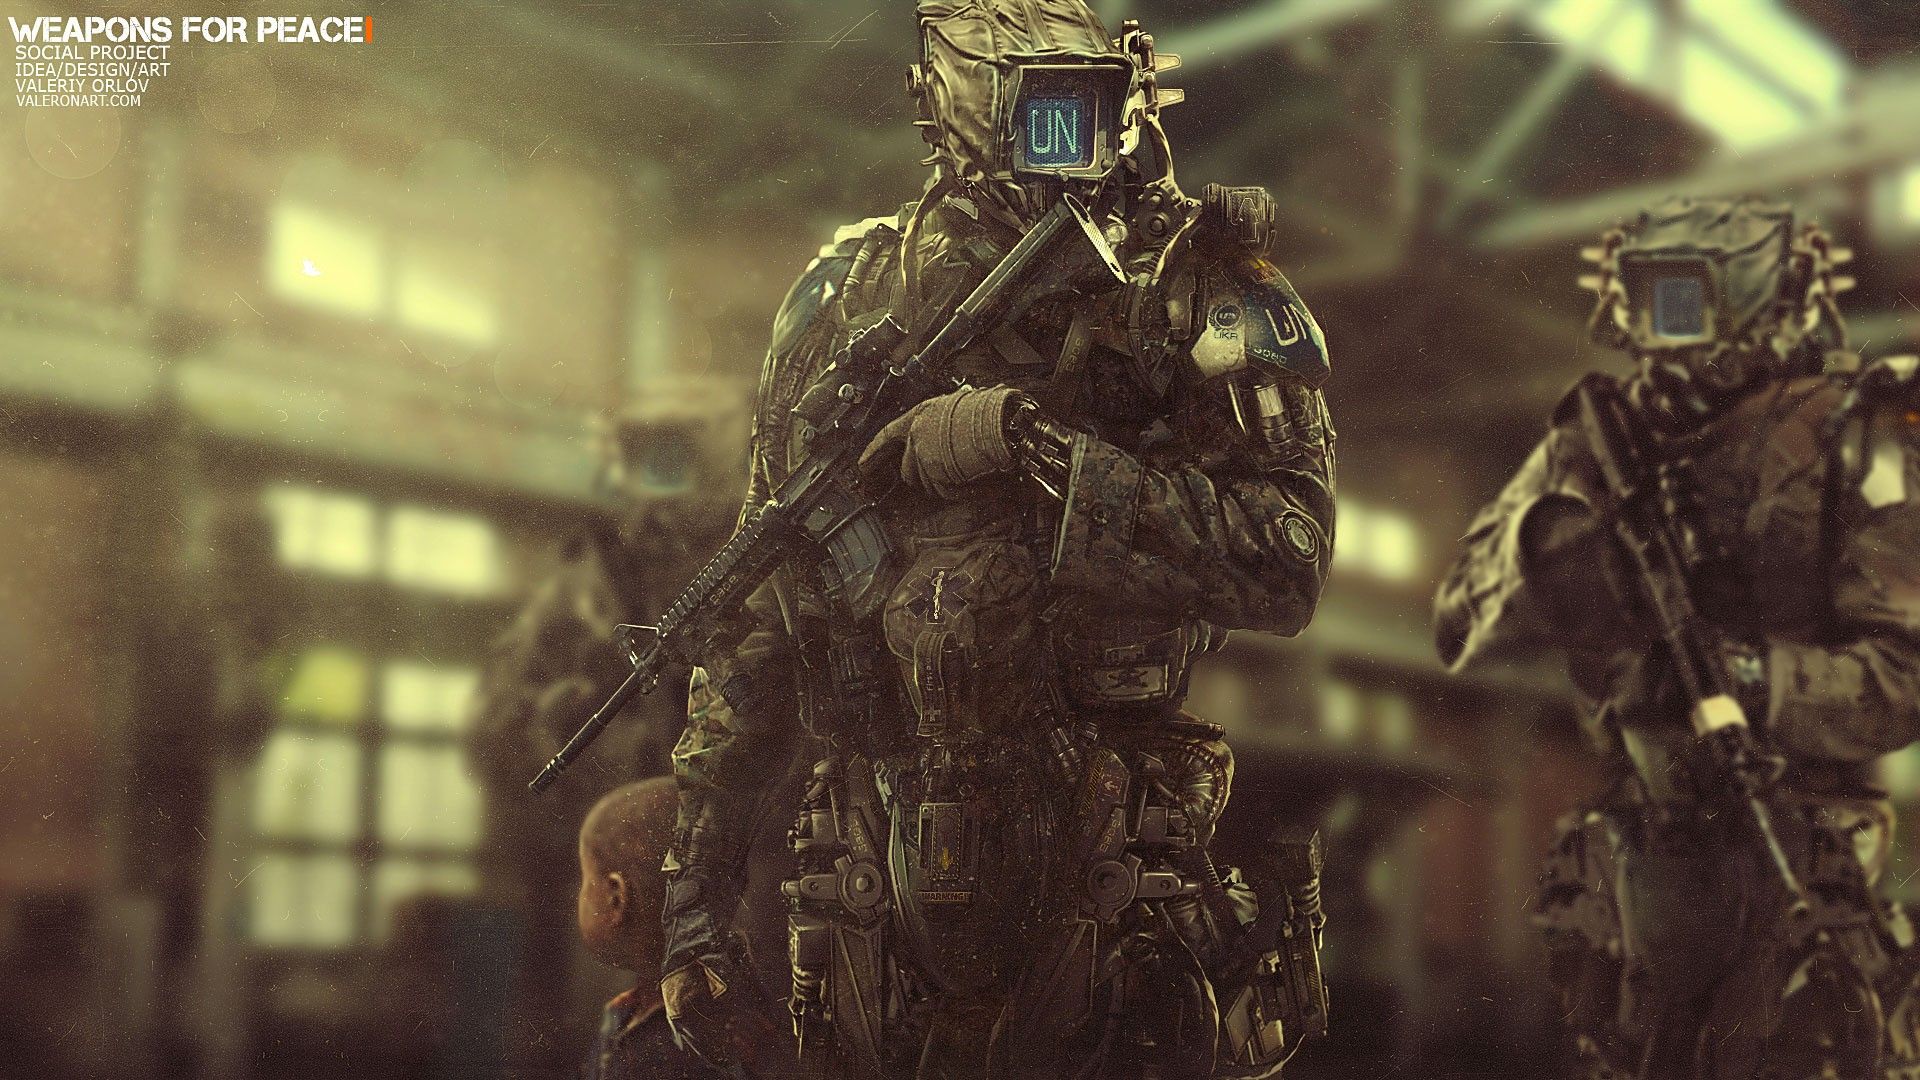 General 1920x1080 M4 soldier cyborg futuristic weapon military science fiction. Sci fi, Sci fi art, Cyberpunk